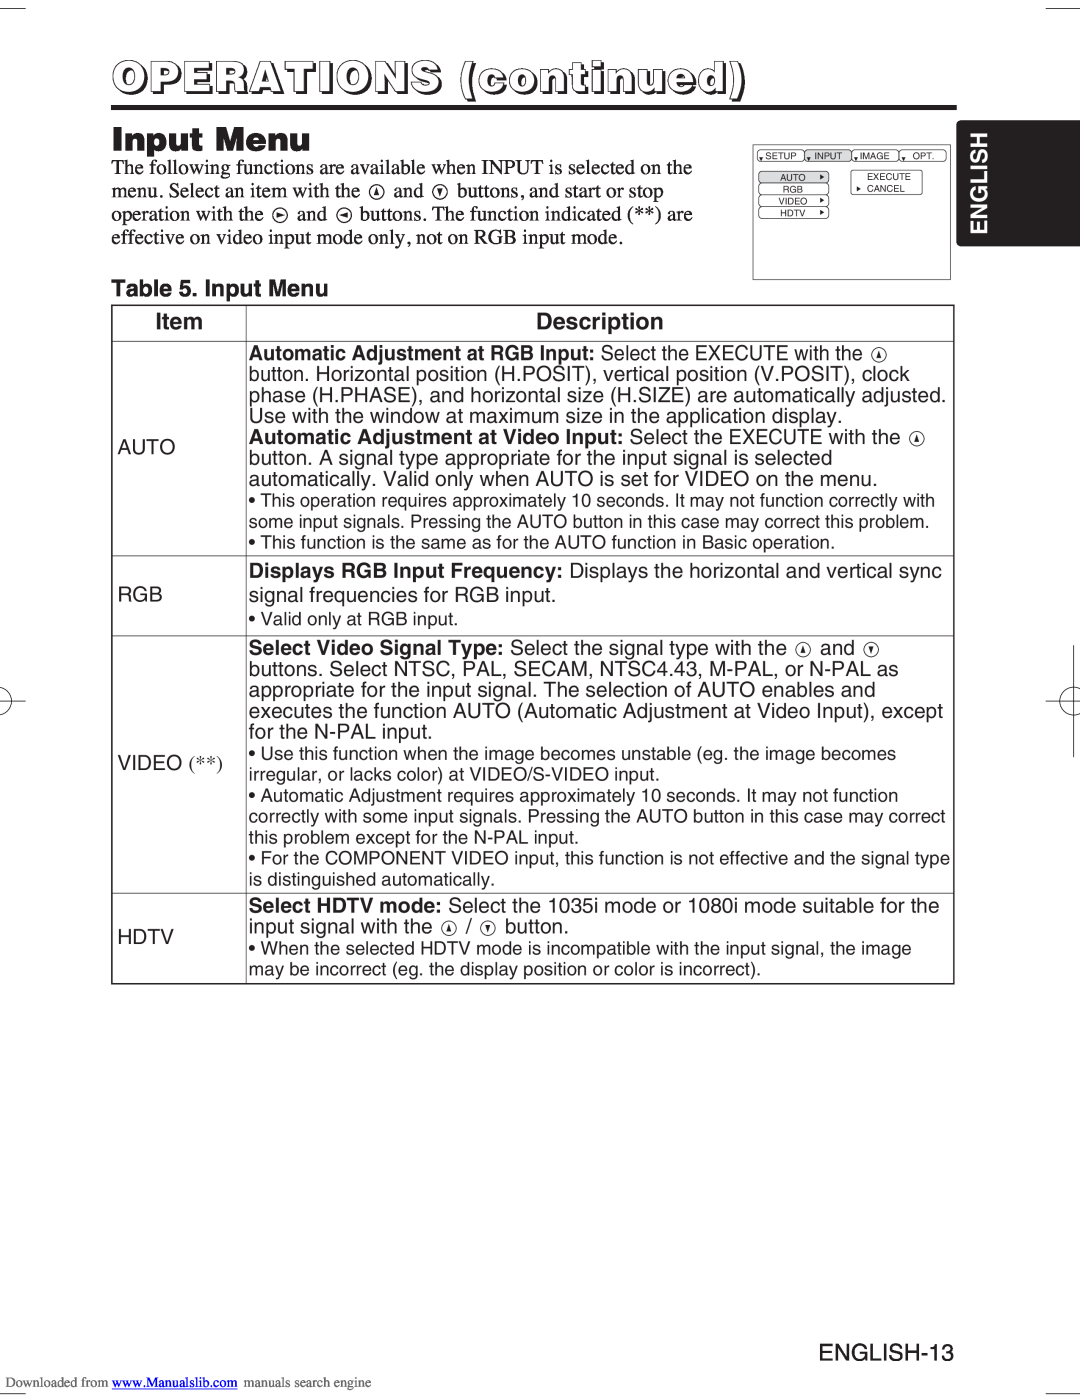 Hitachi CP-S370W user manual Input Menu, OPERATIONS continued, English, Description 